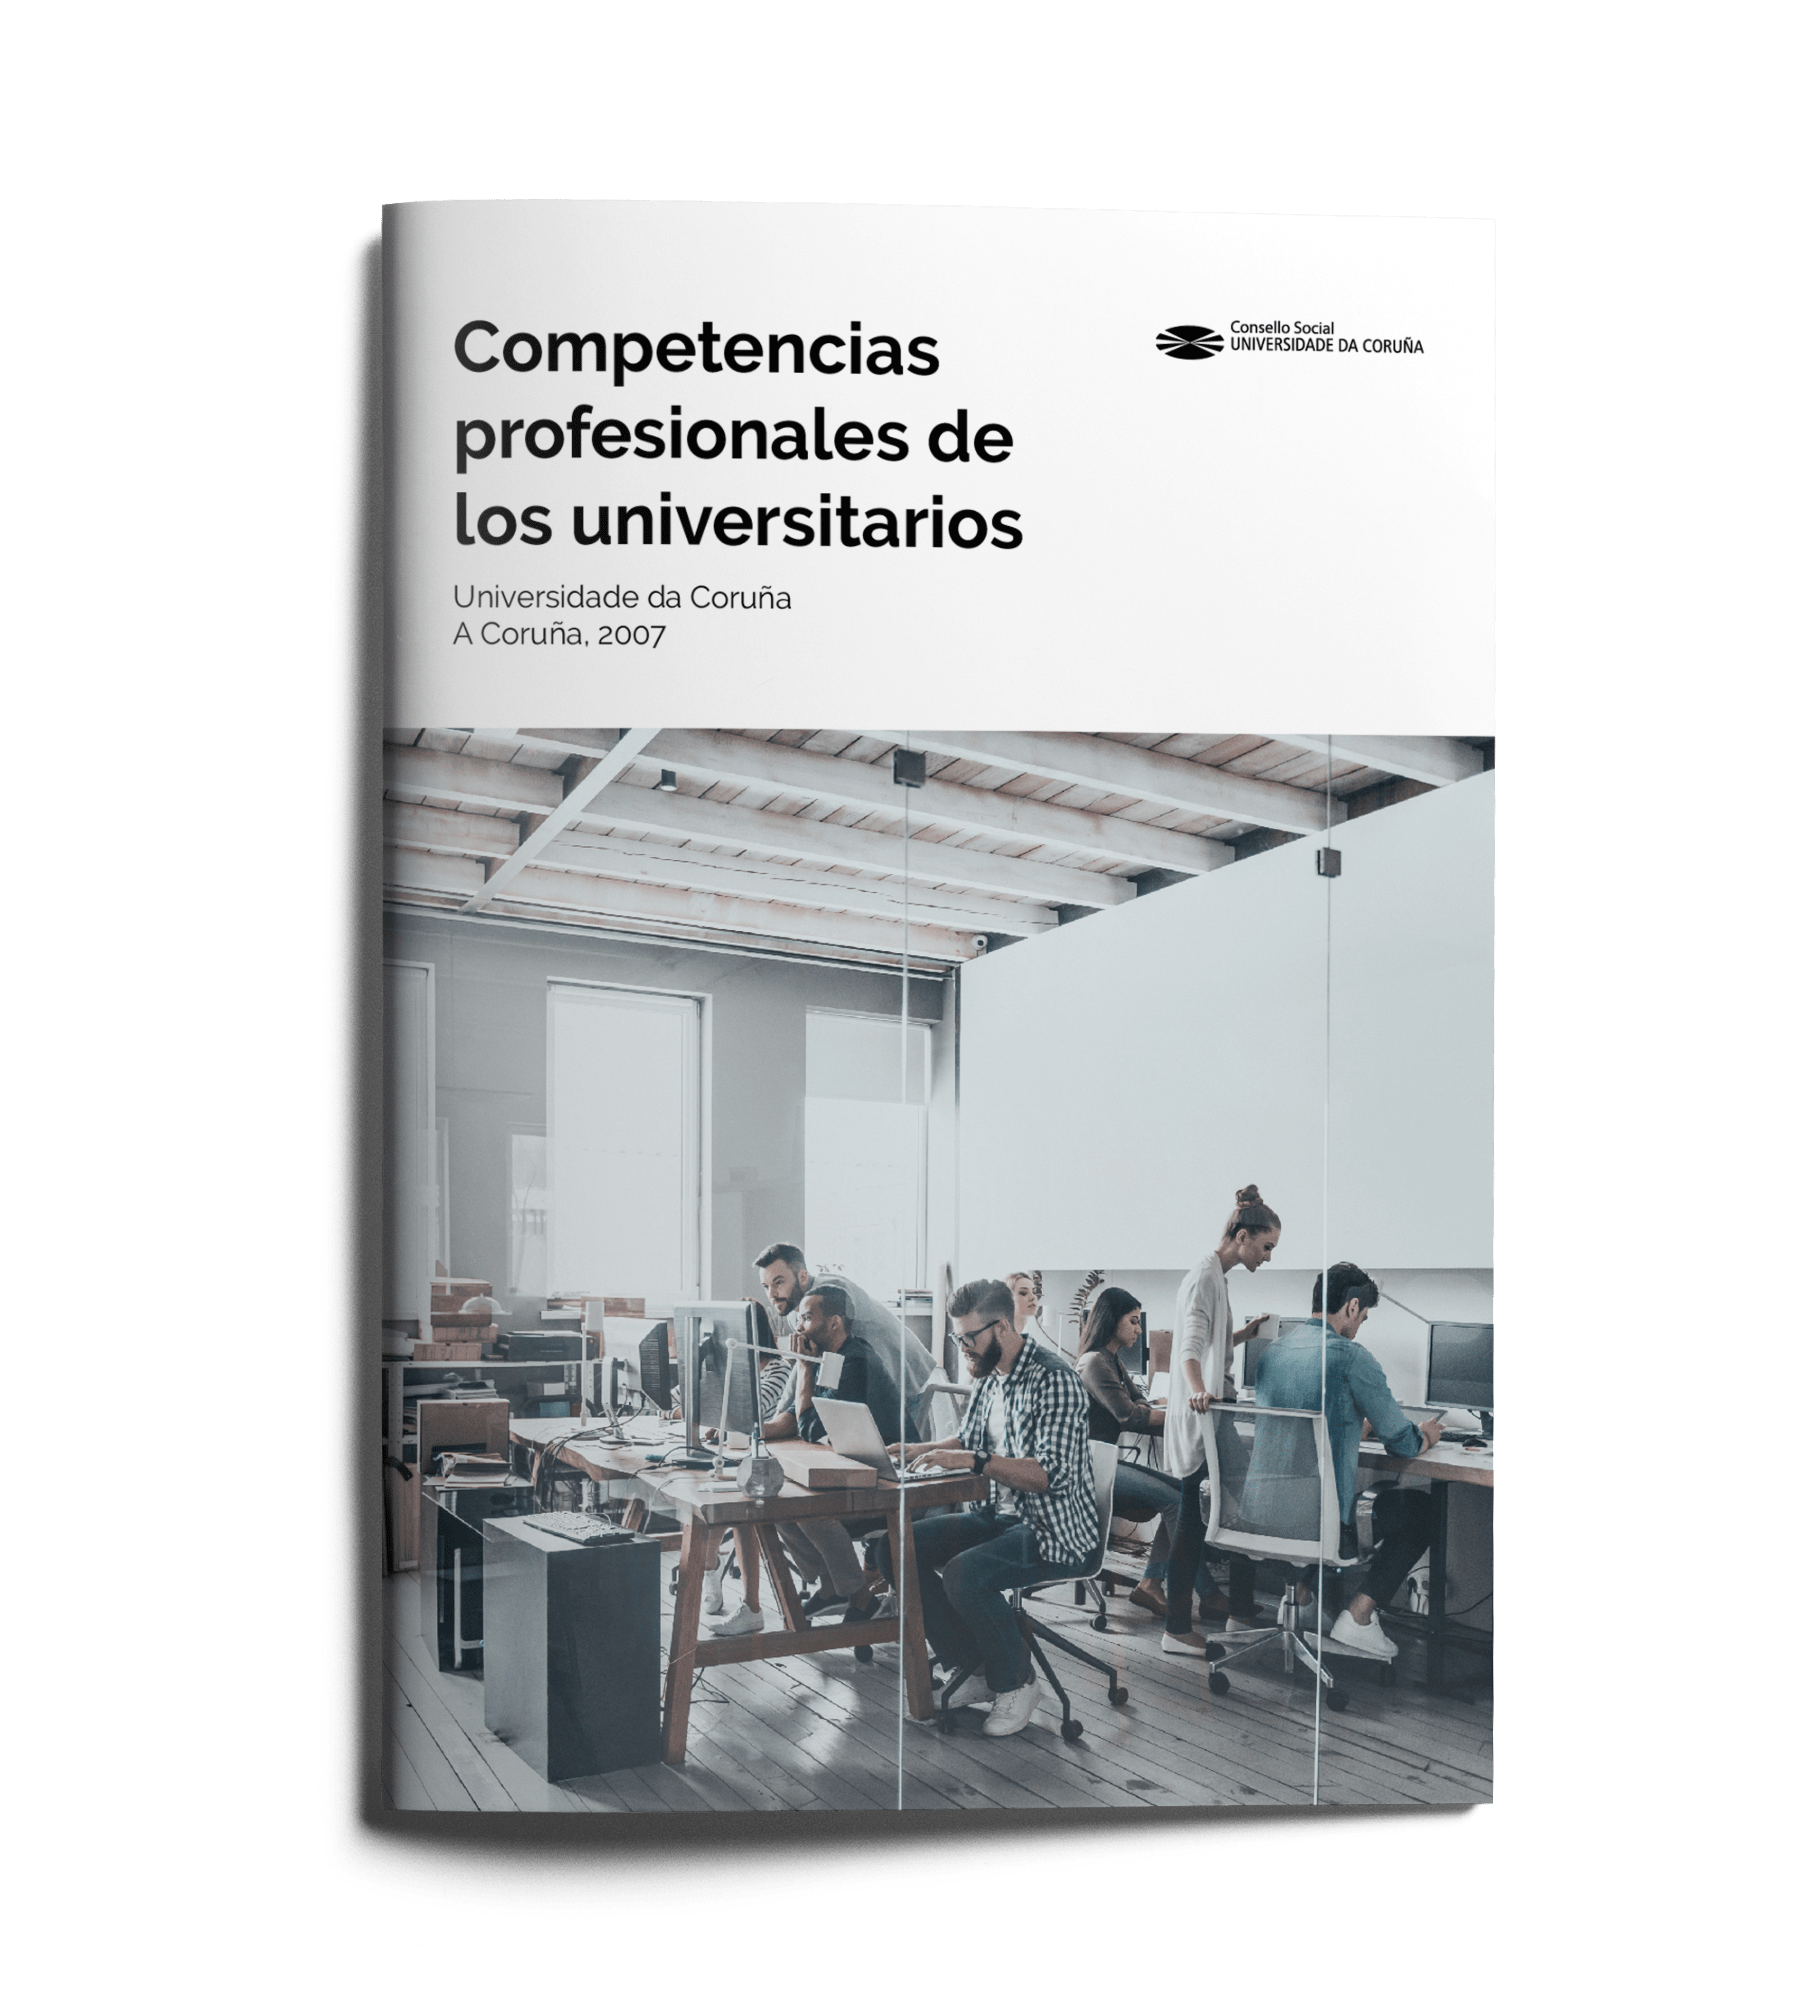 https://consellosocial.udc.es/wp-content/uploads/2019/07/competencias-profesionales-universitarios-udc.png